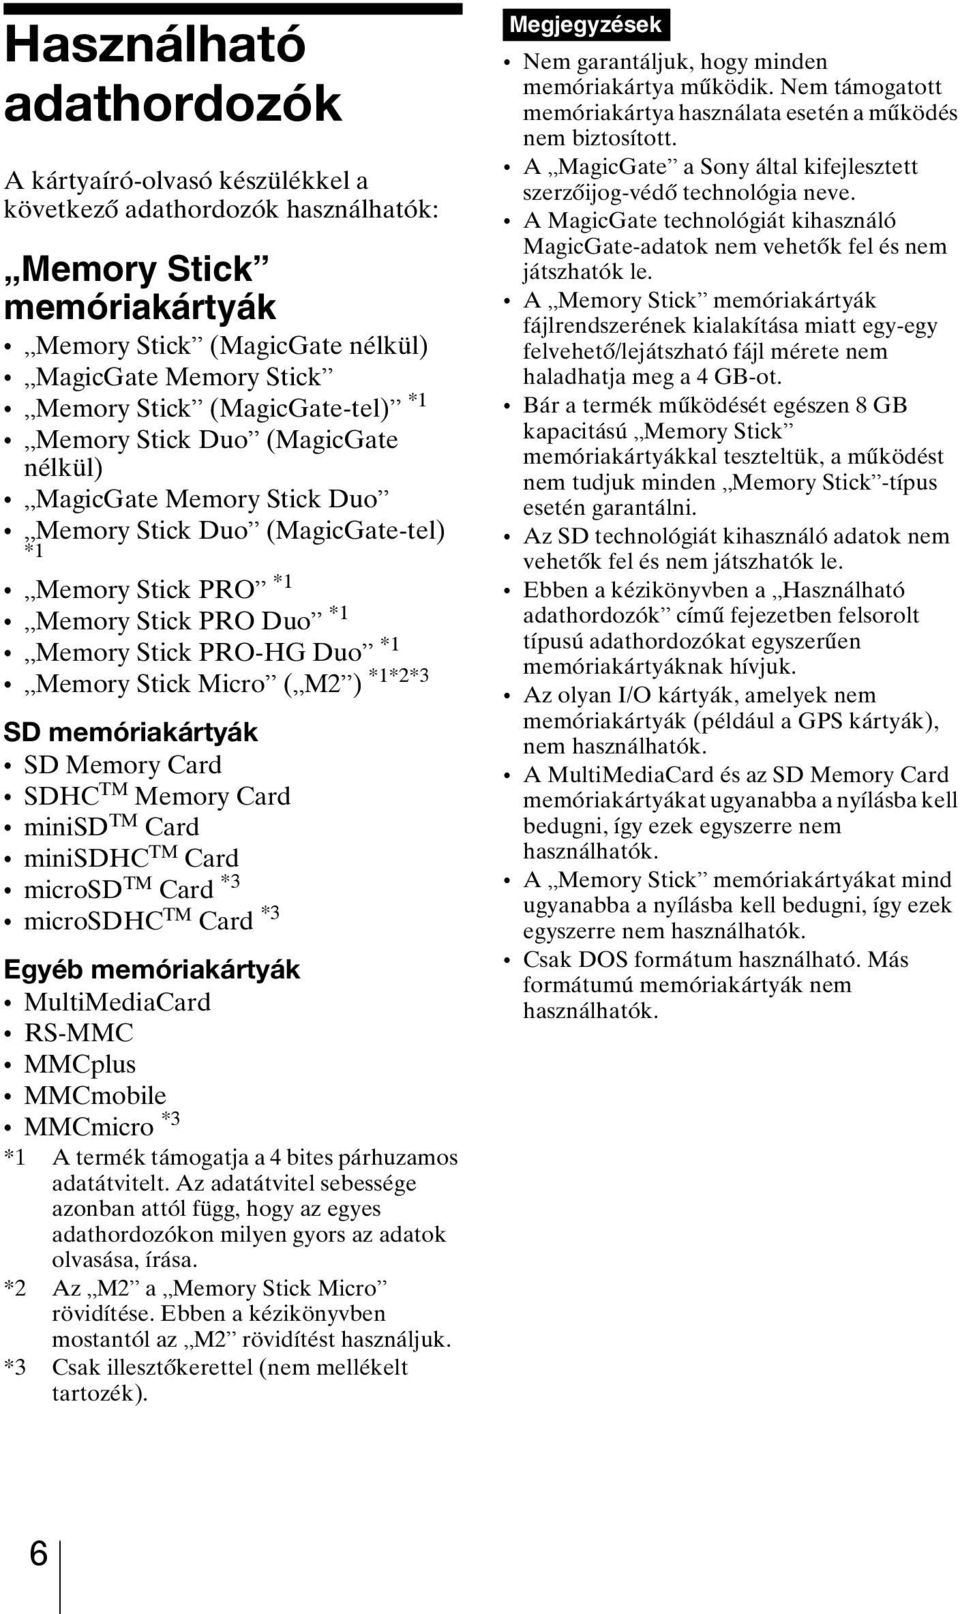 Stick Micro ( M2 ) *1*2*3 SD memóriakártyák SD Memory Card SDHC TM Memory Card minisd TM Card minisdhc TM Card microsd TM Card *3 microsdhc TM Card *3 Egyéb memóriakártyák MultiMediaCard RS-MMC